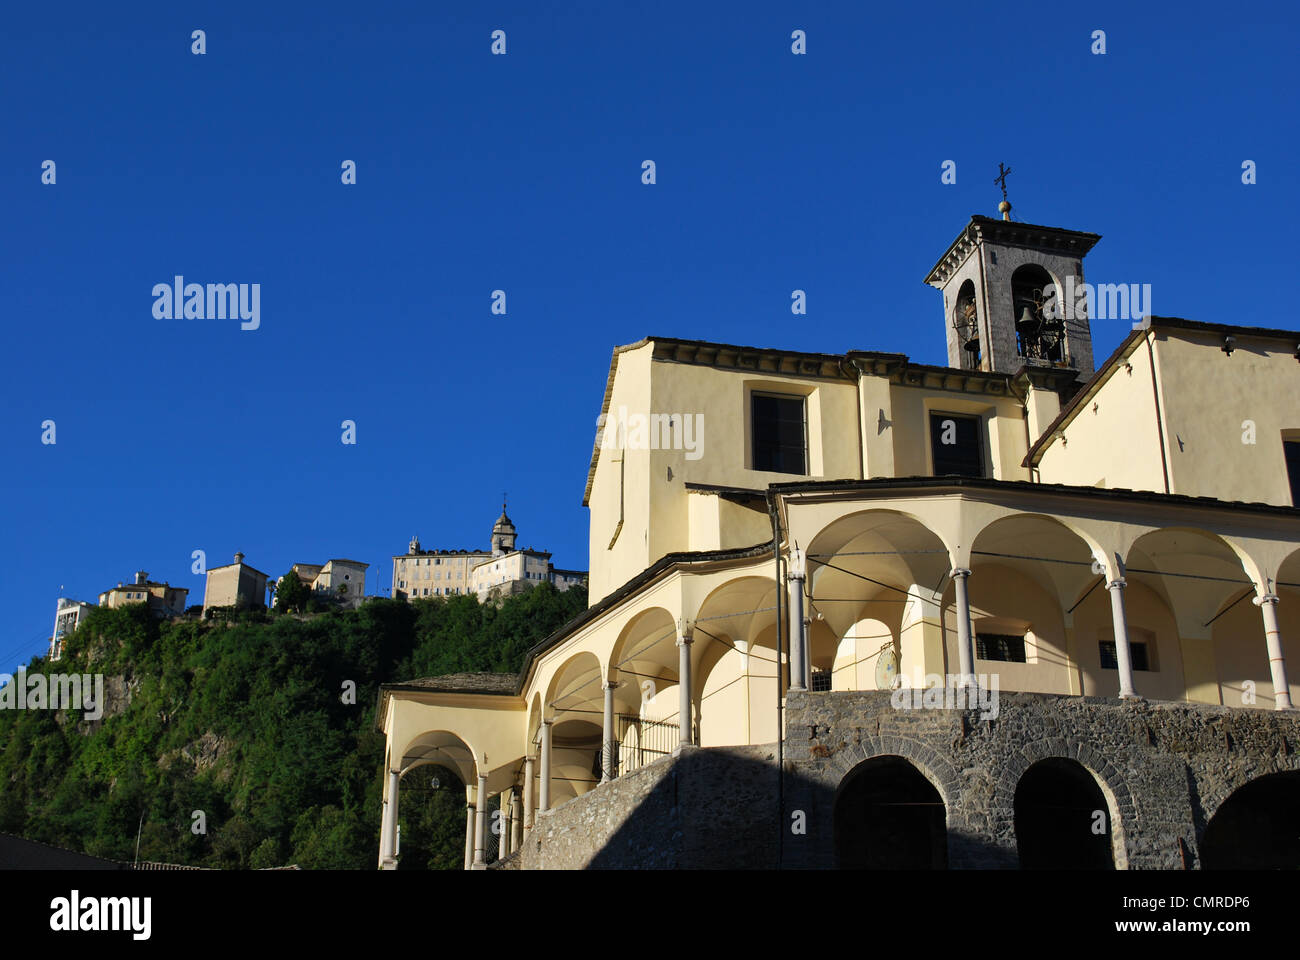 San Gaudenzio chiesa contro il cielo blu, montagna sacra santuario sullo sfondo, Varallo Sesia, Piemonte, Italia Foto Stock